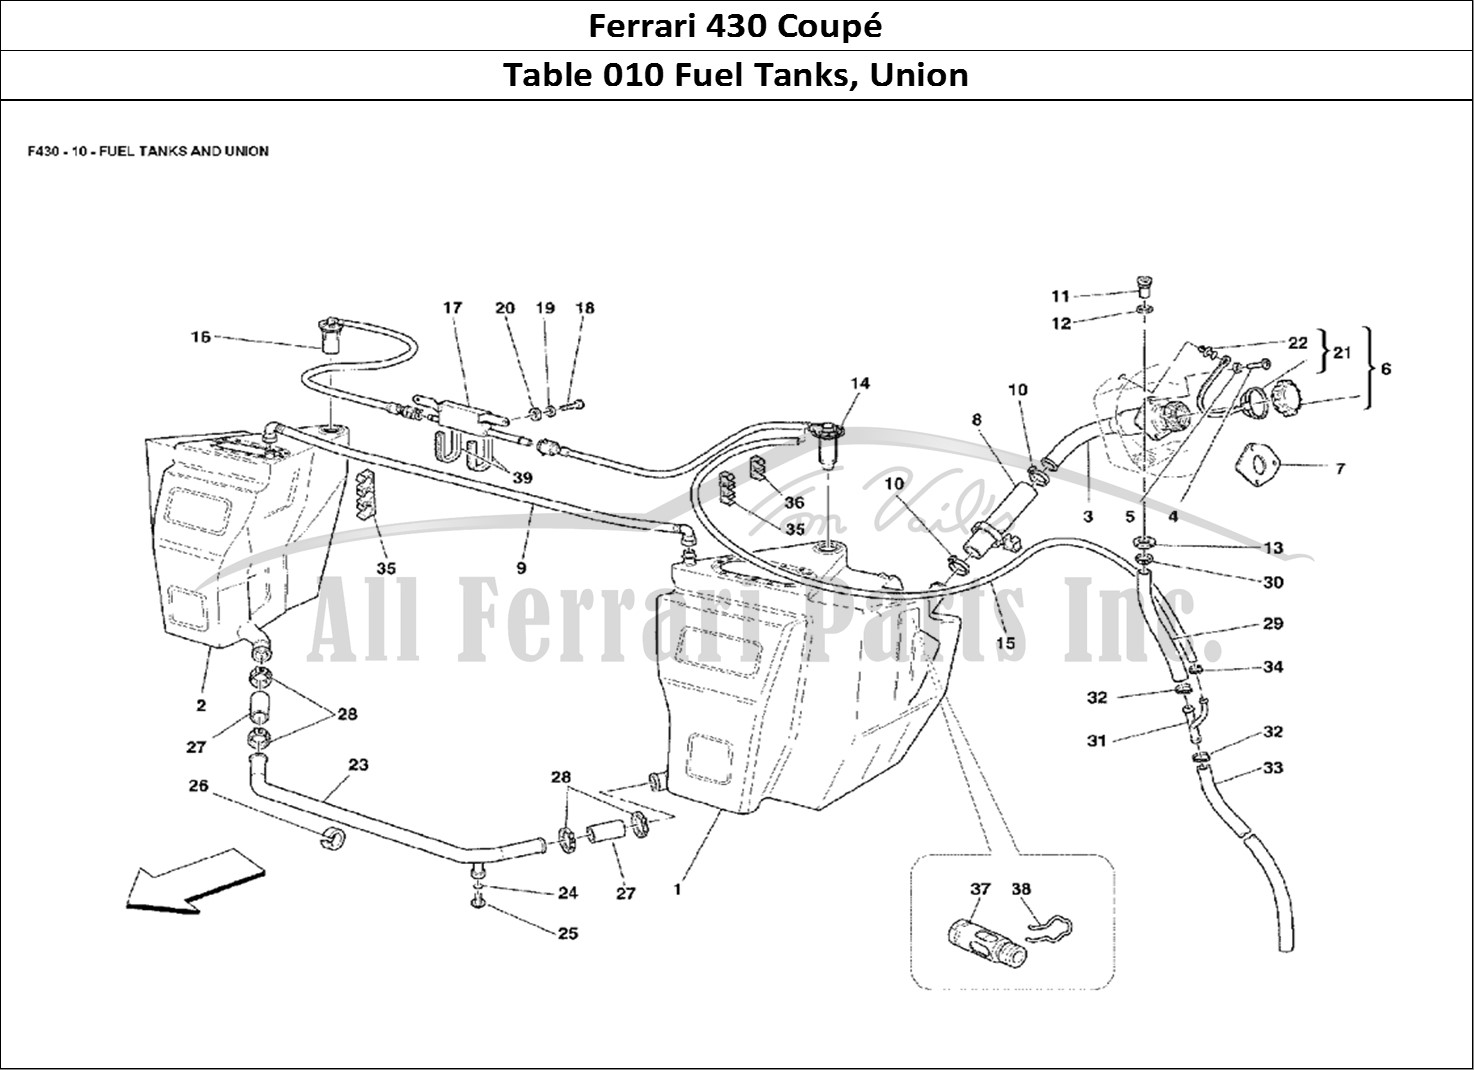 Ferrari Parts Ferrari 430 Coup Page 010 Fuel Tanks and Union